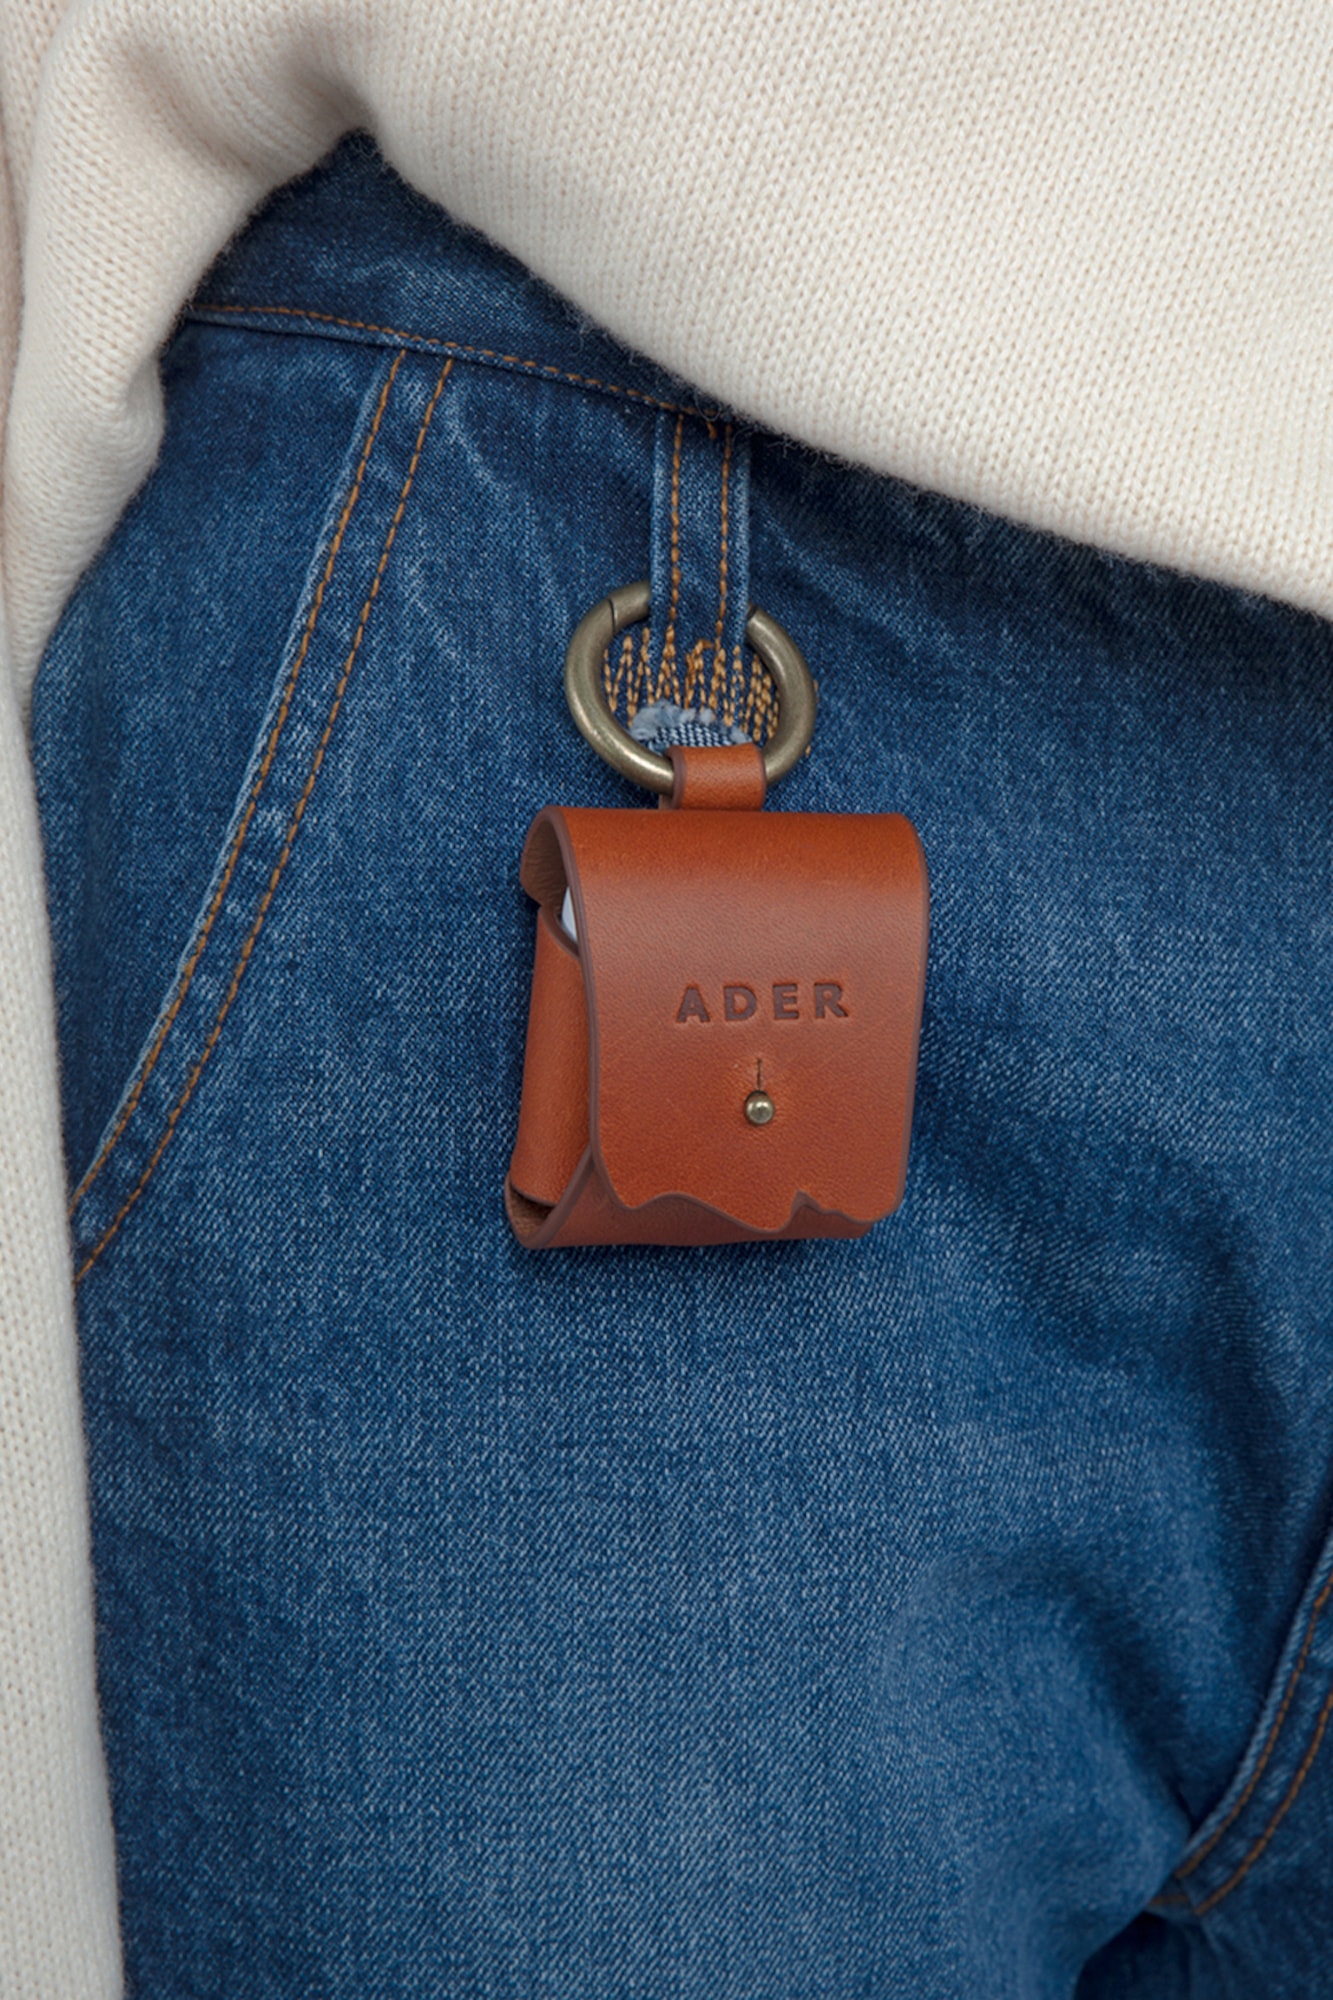 Ader ERROR Apple AirPod Case Leather Rubber Logo Accessory 